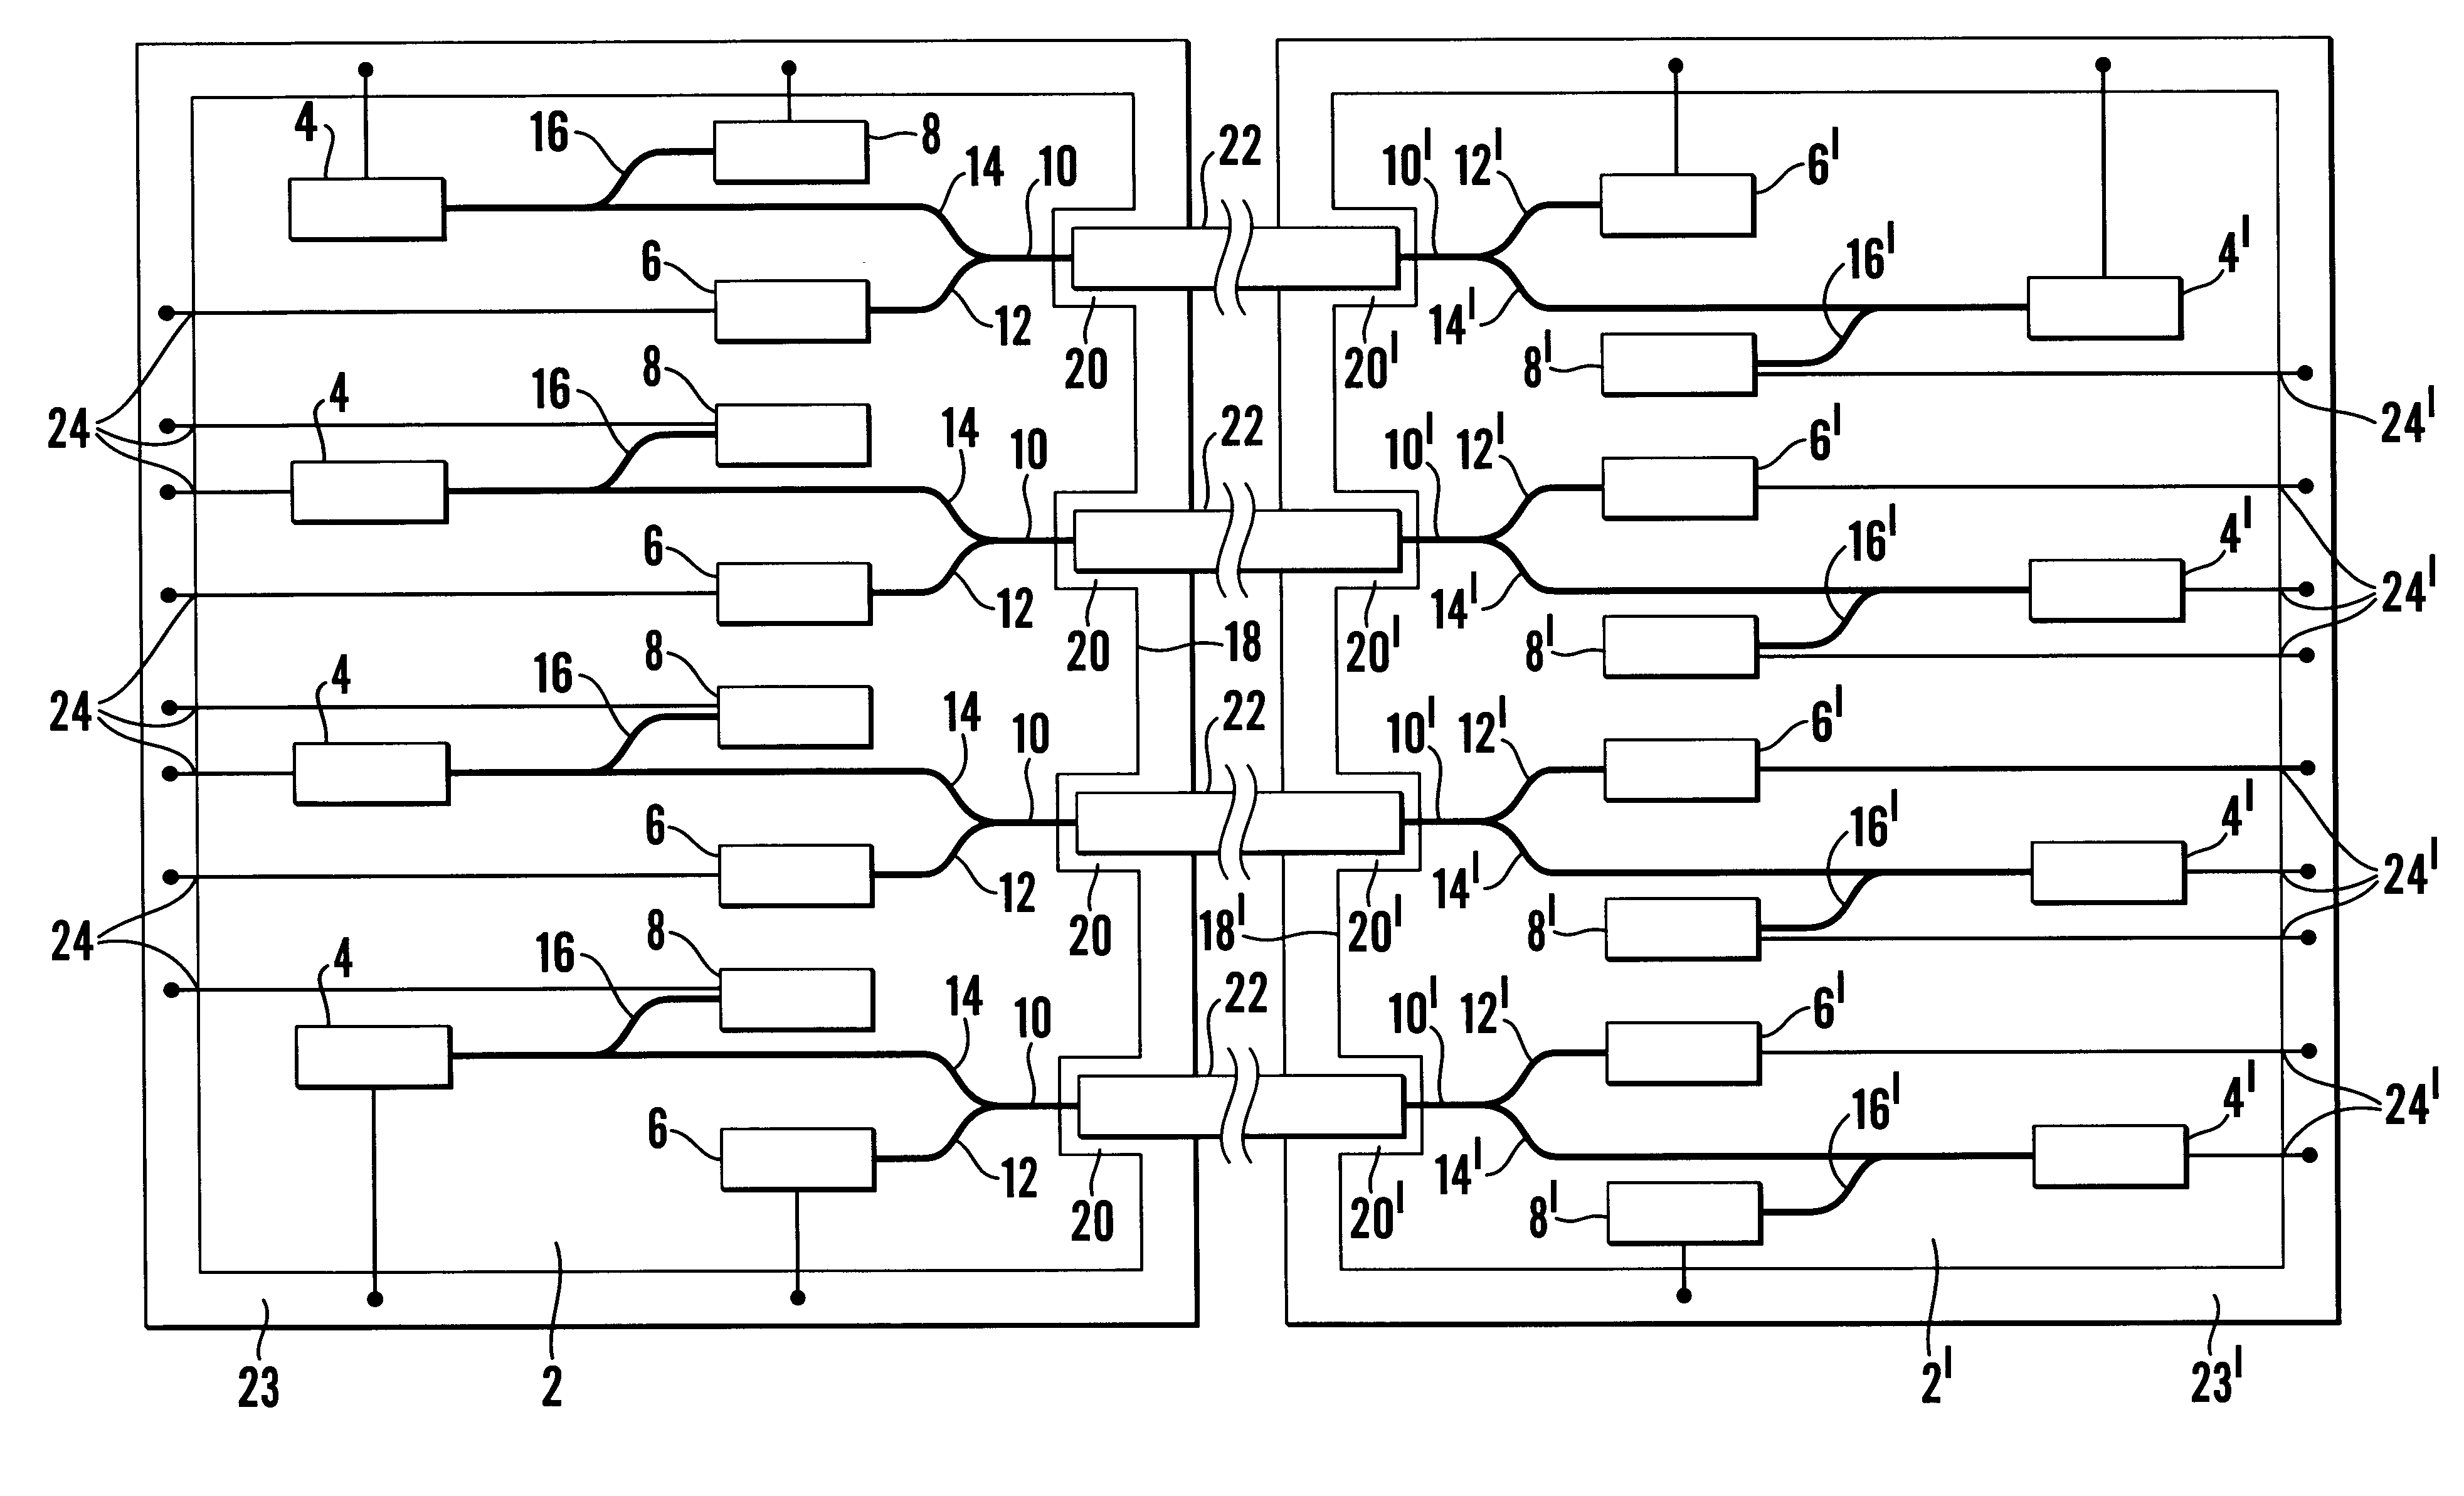 Optical link between electrical circuit boards